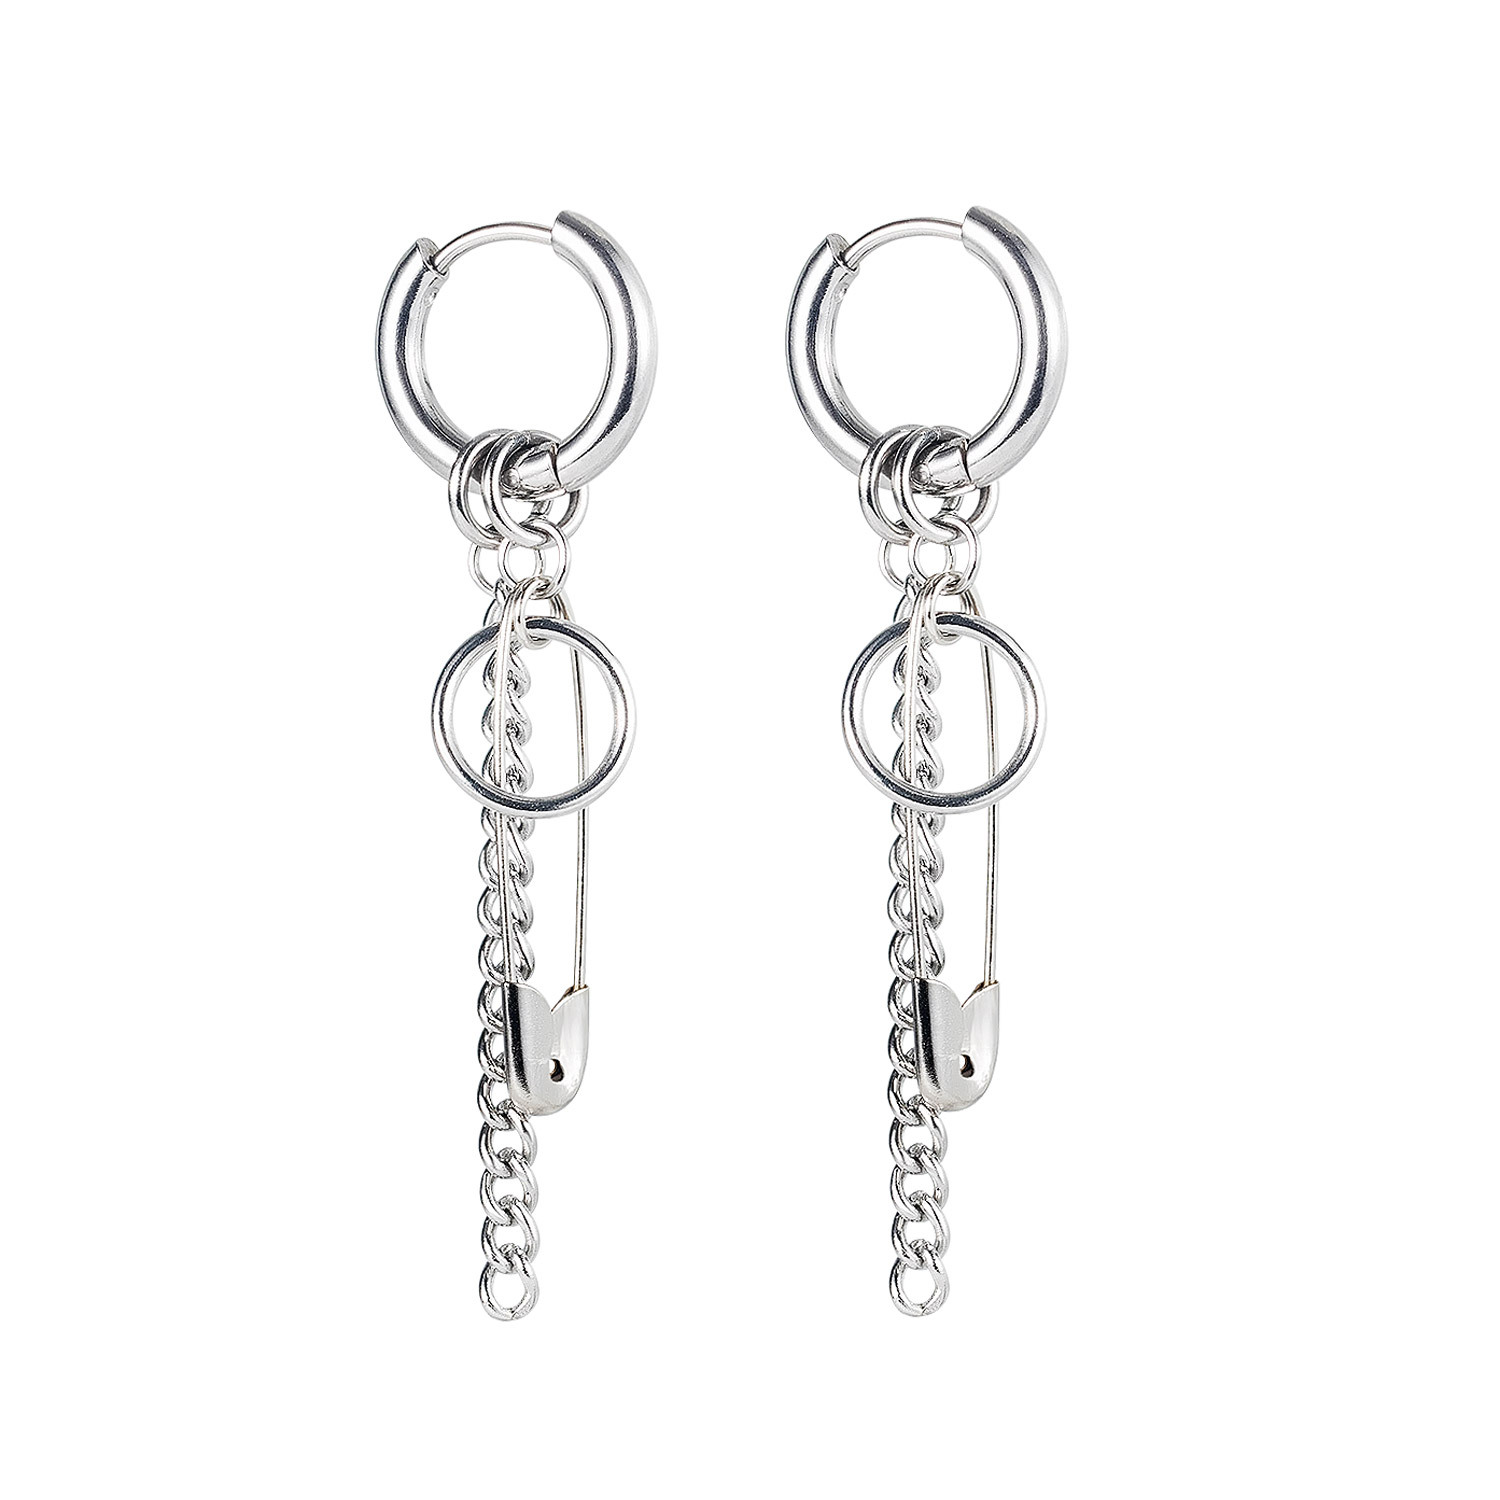 OPK jewelry men and women Hong Kong style fashion classic circular ring long chain trend titanium steel earrings earrings 2021 new